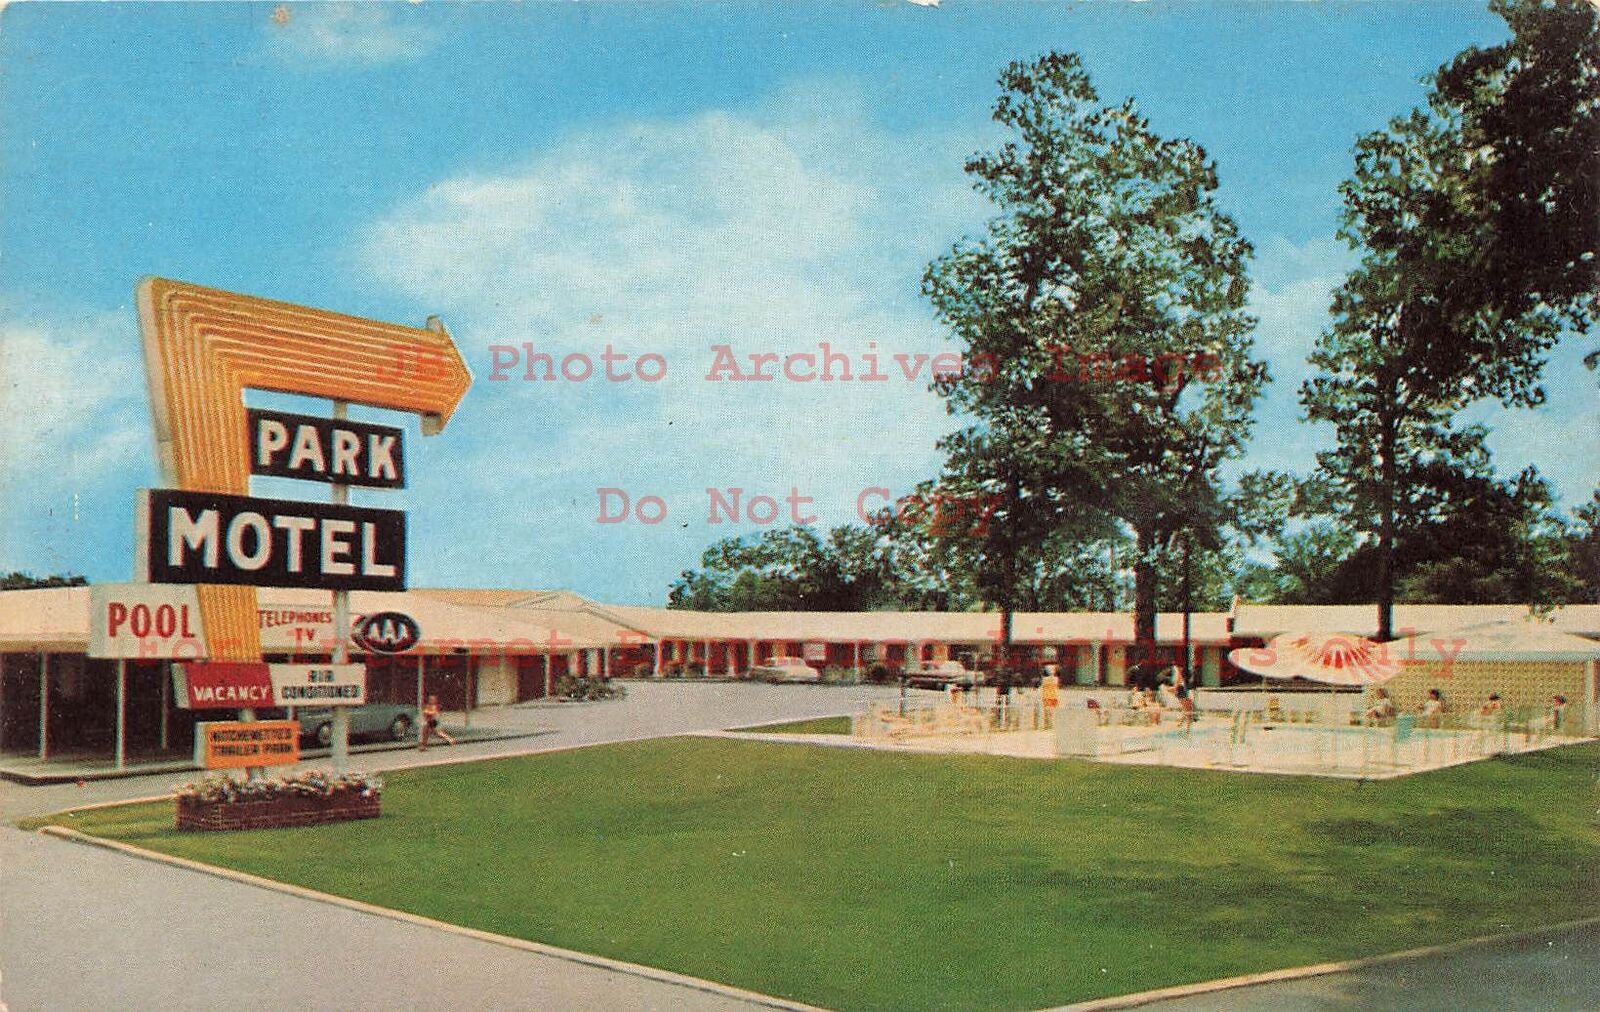 AR, Russellville, Arkansas, Park Motel, Exterior View, MWM Pub No 57,751F